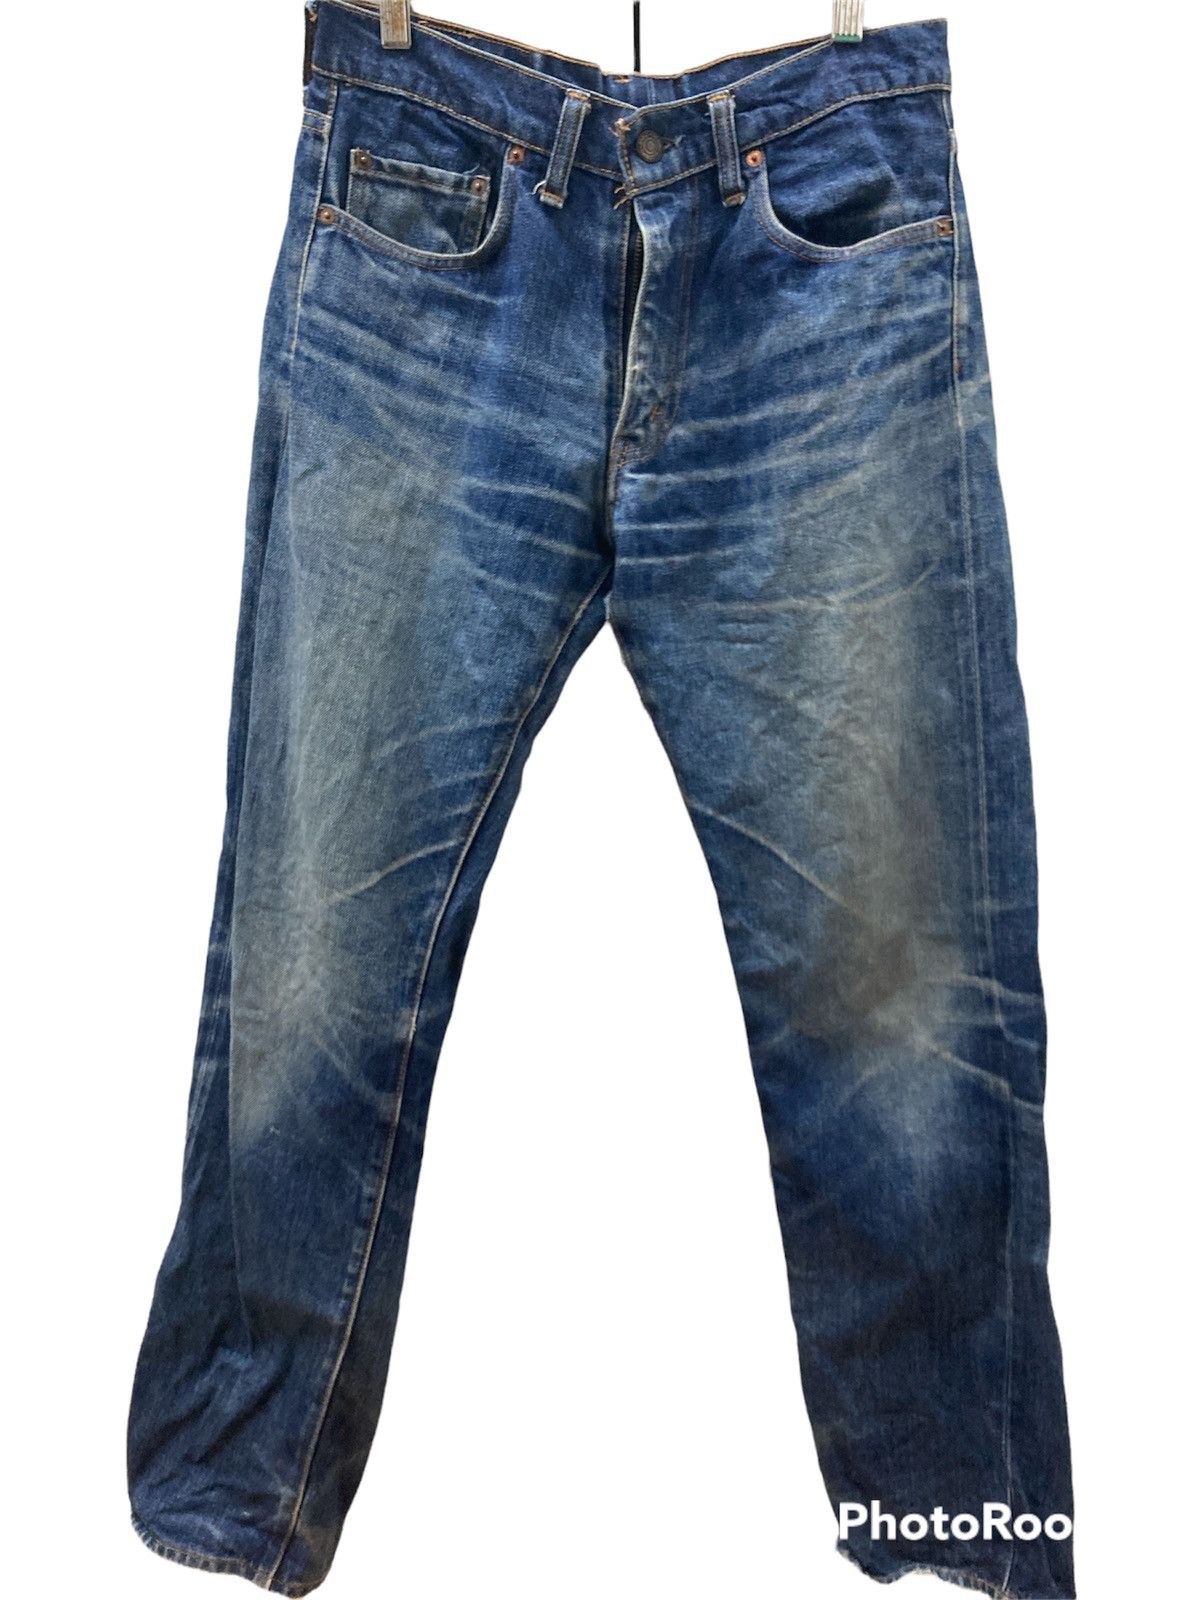 Denime Vintage denime jeans Size US 30 / EU 46 - 1 Preview